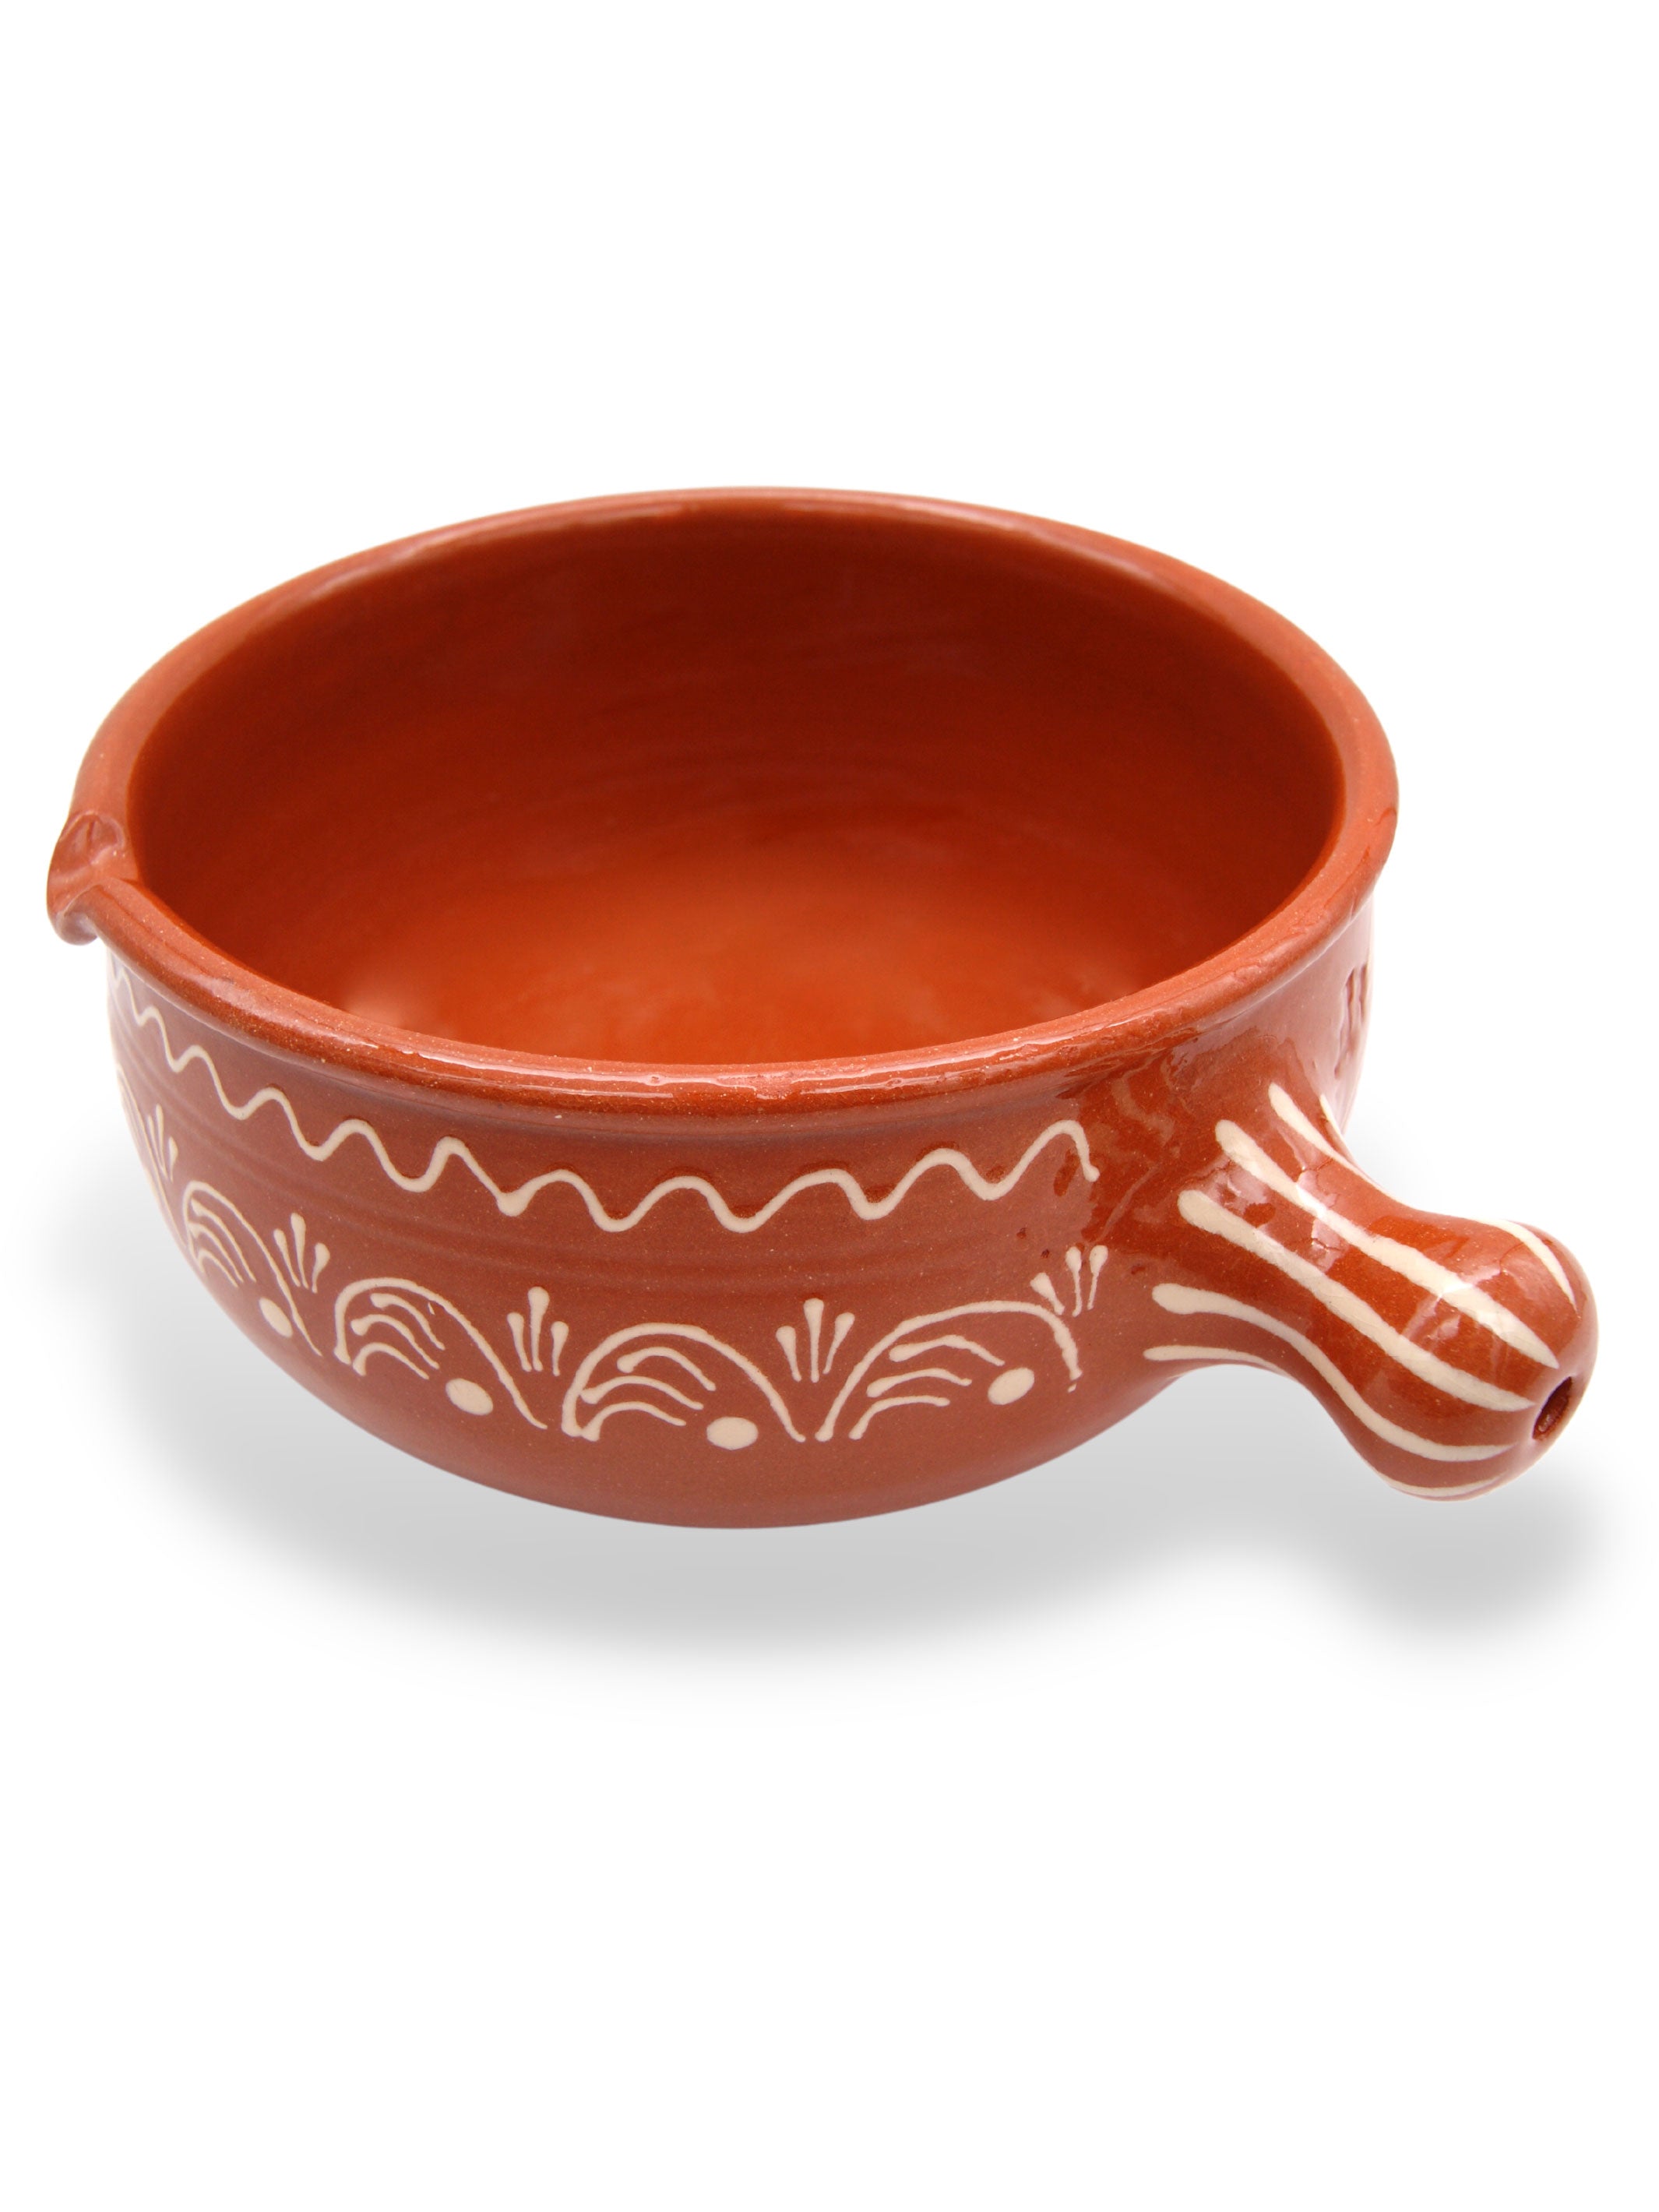 Portuguese Pottery Glazed Terracotta Cooking Pot Casserole